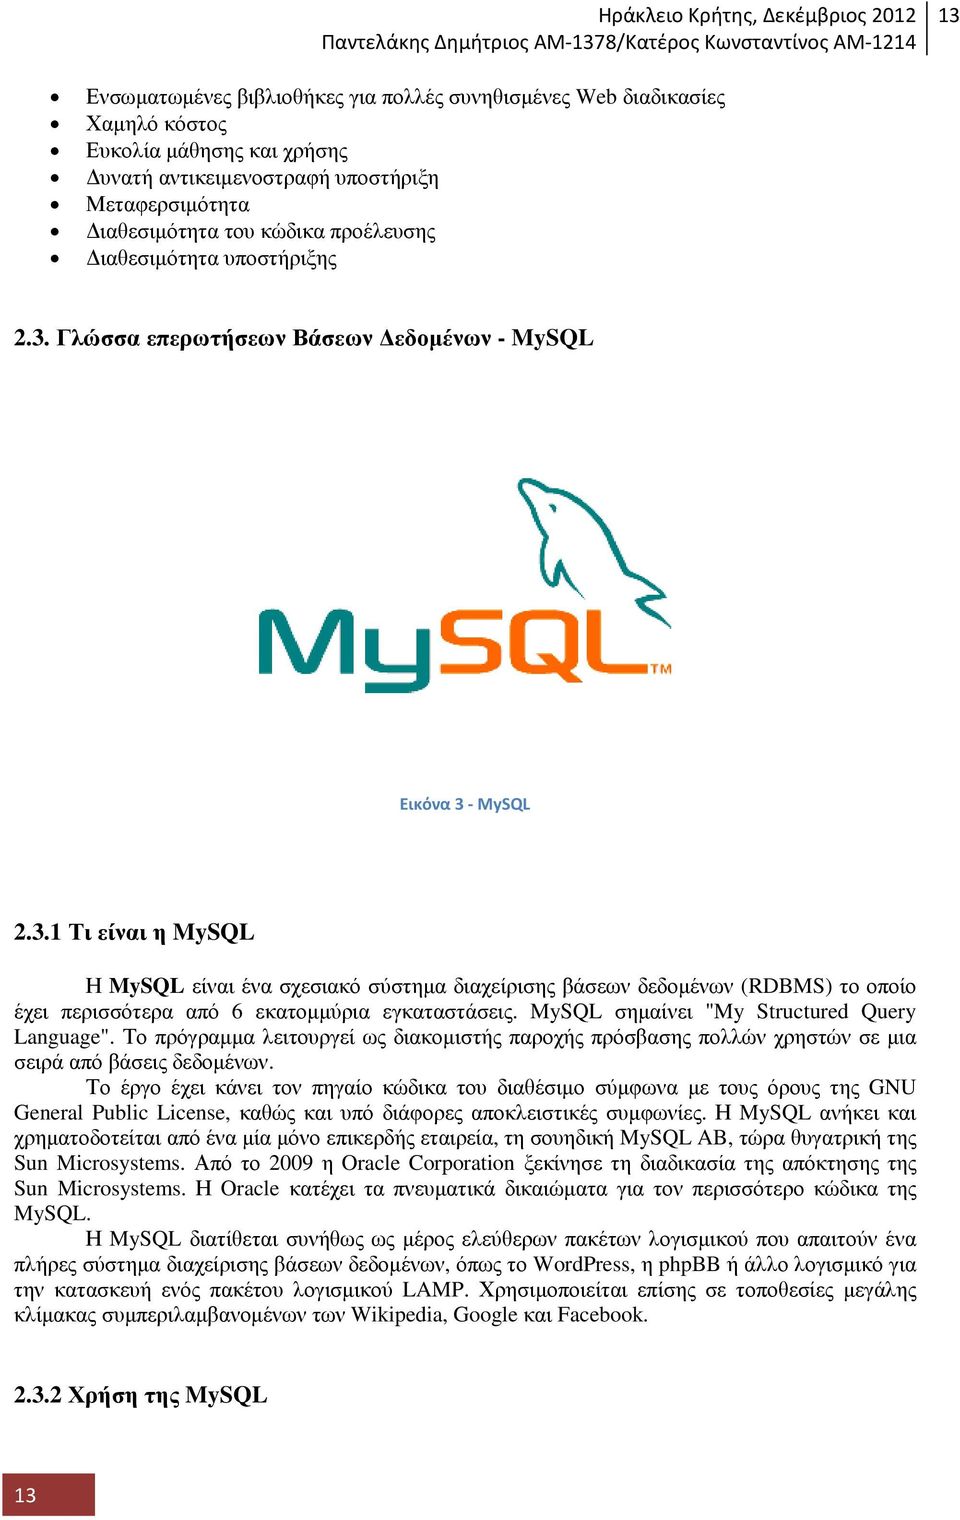 MySQL σηµαίνει "My Structured Query Language". Το πρόγραµµα λειτουργεί ως διακοµιστής παροχής πρόσβασης πολλών χρηστών σε µια σειρά από βάσεις δεδοµένων.